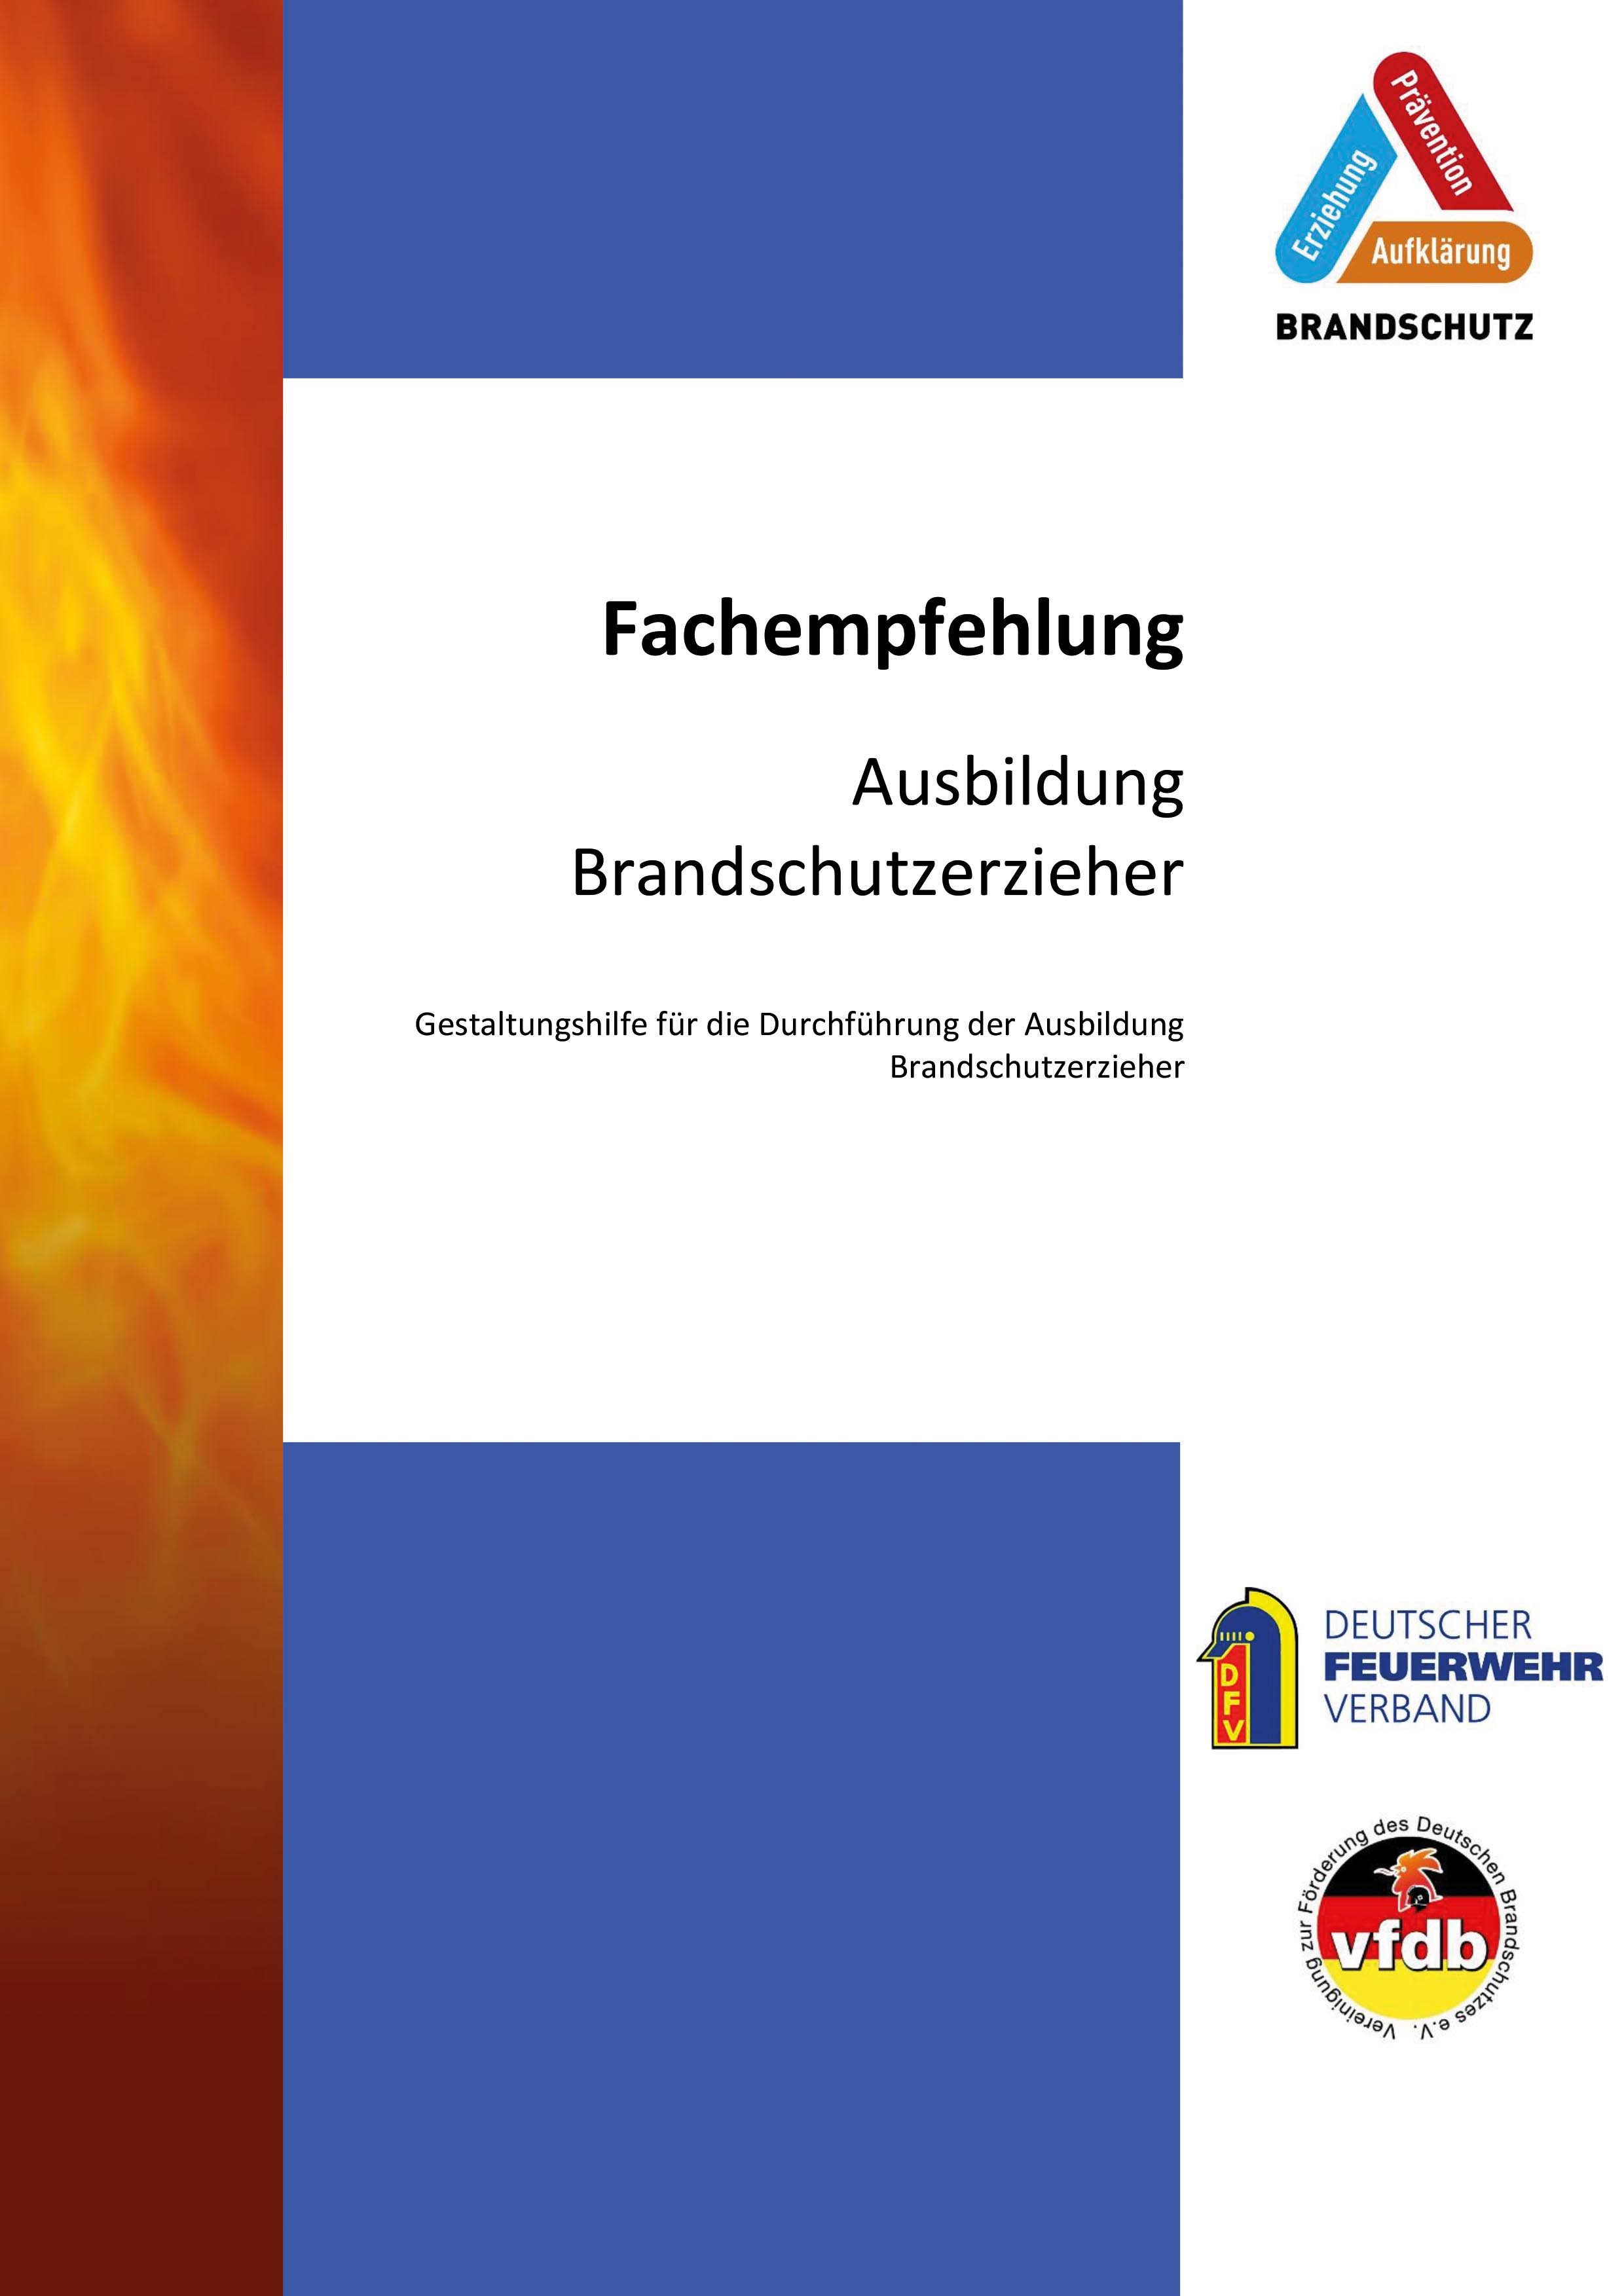 DFV-vfdb_FE_Ausbildung_Brandschutzerzieher_210614-1